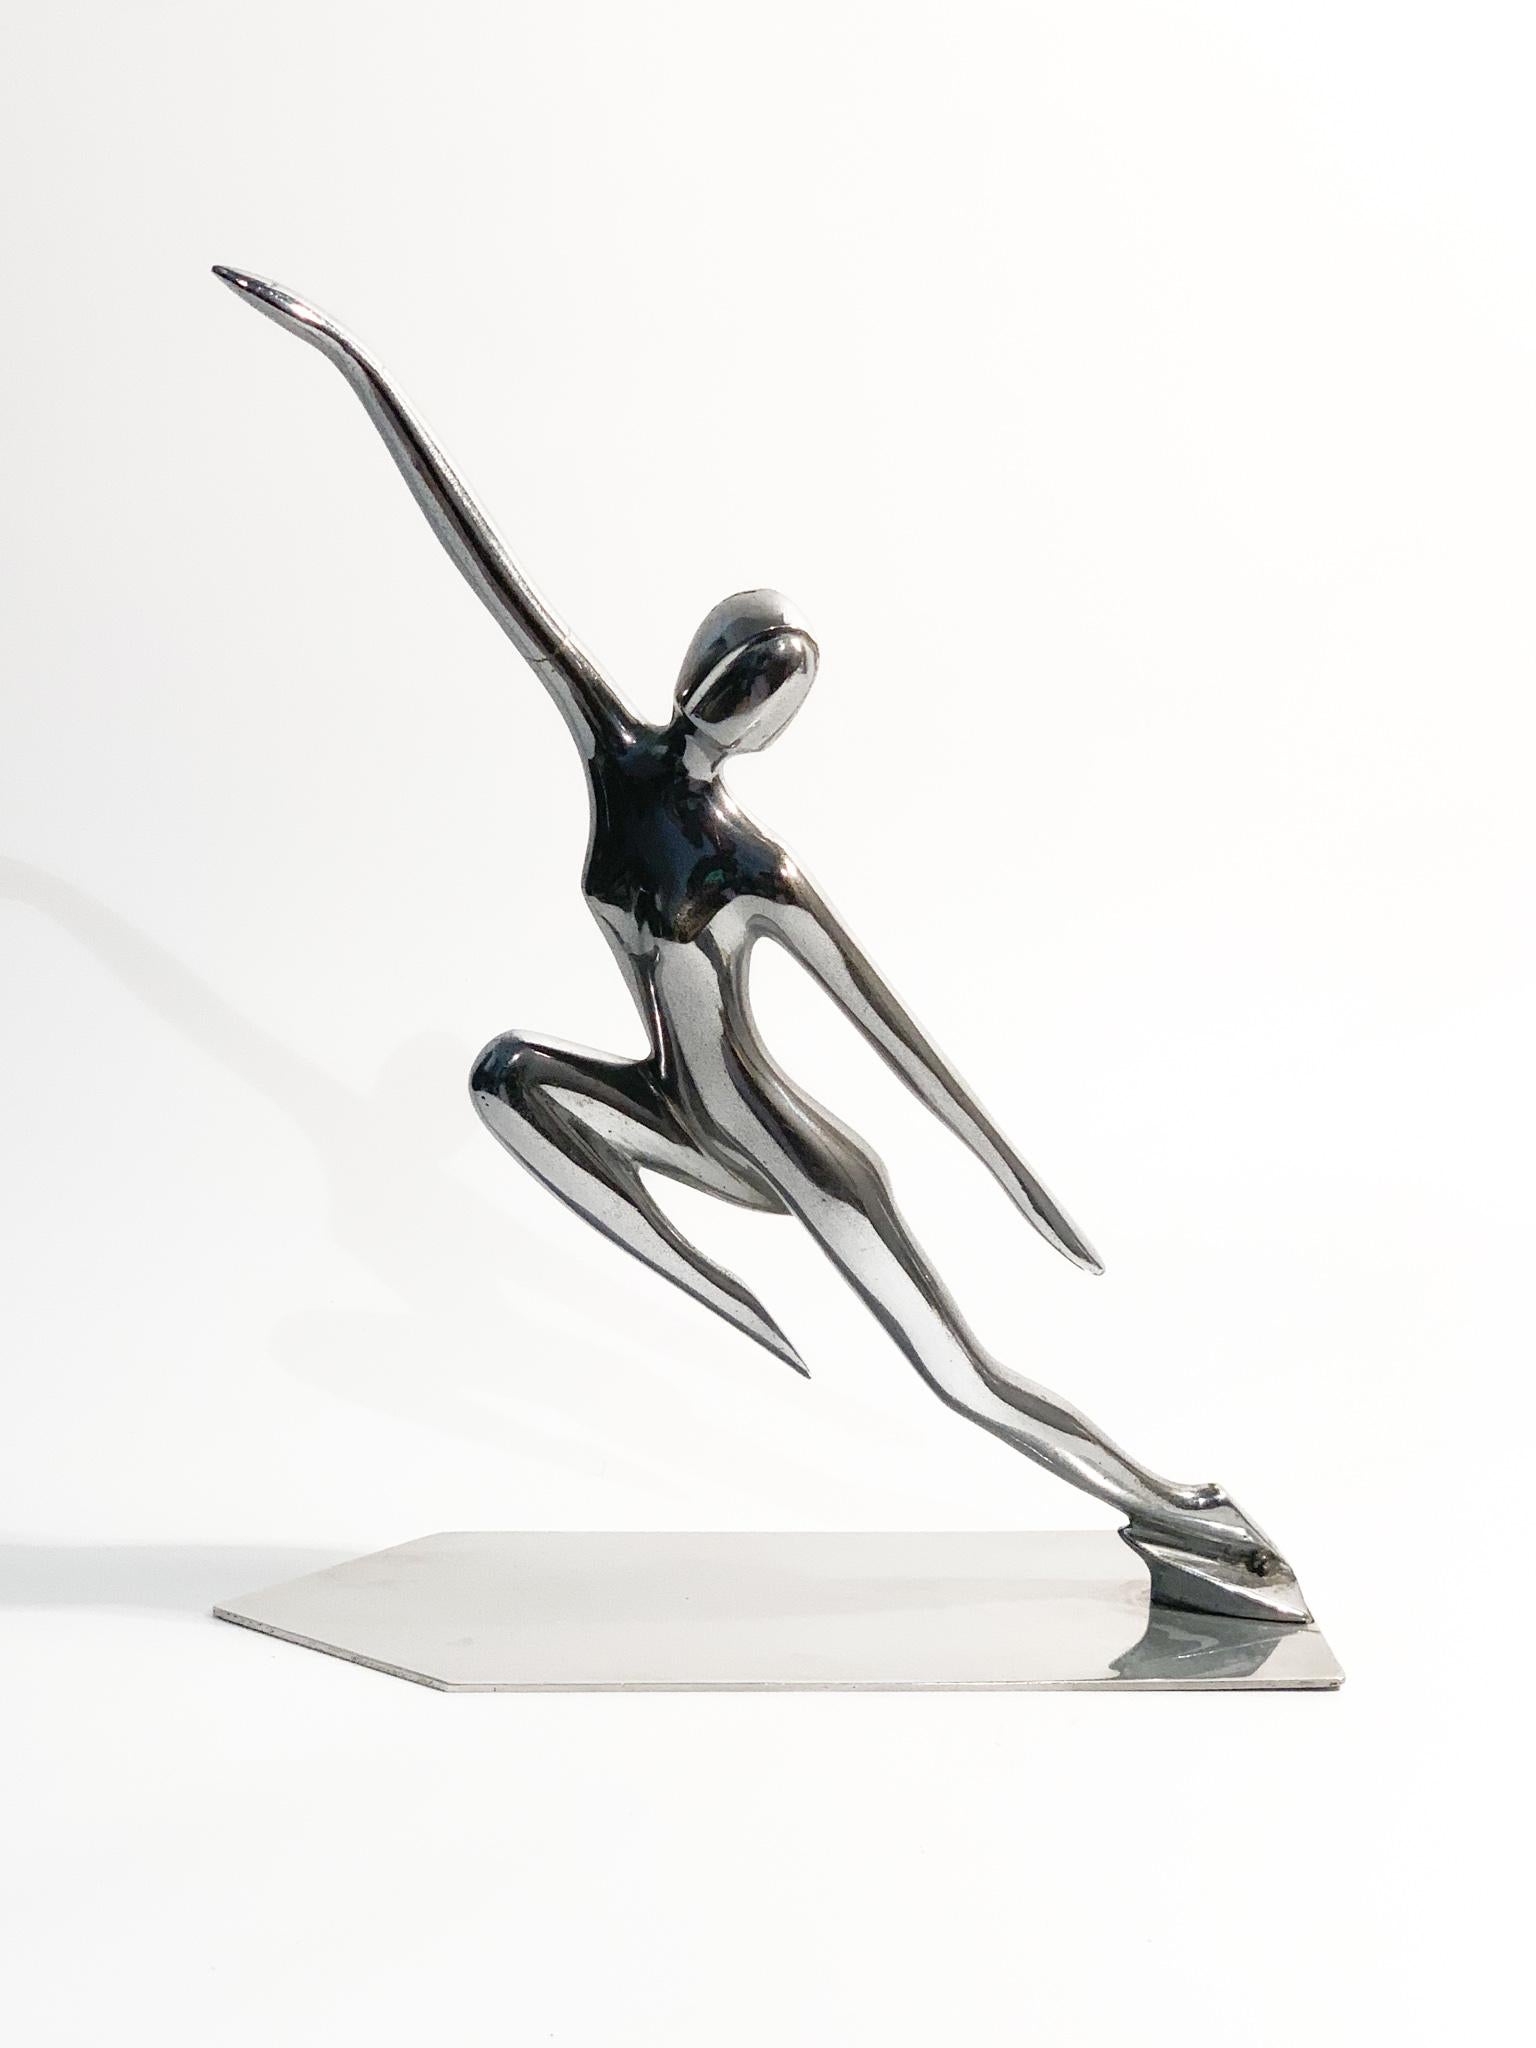 Artistic deco metal statue depicting a dancer, made in the 1930s

Ø 23 cm Ø 7.5 cm h 27 cm